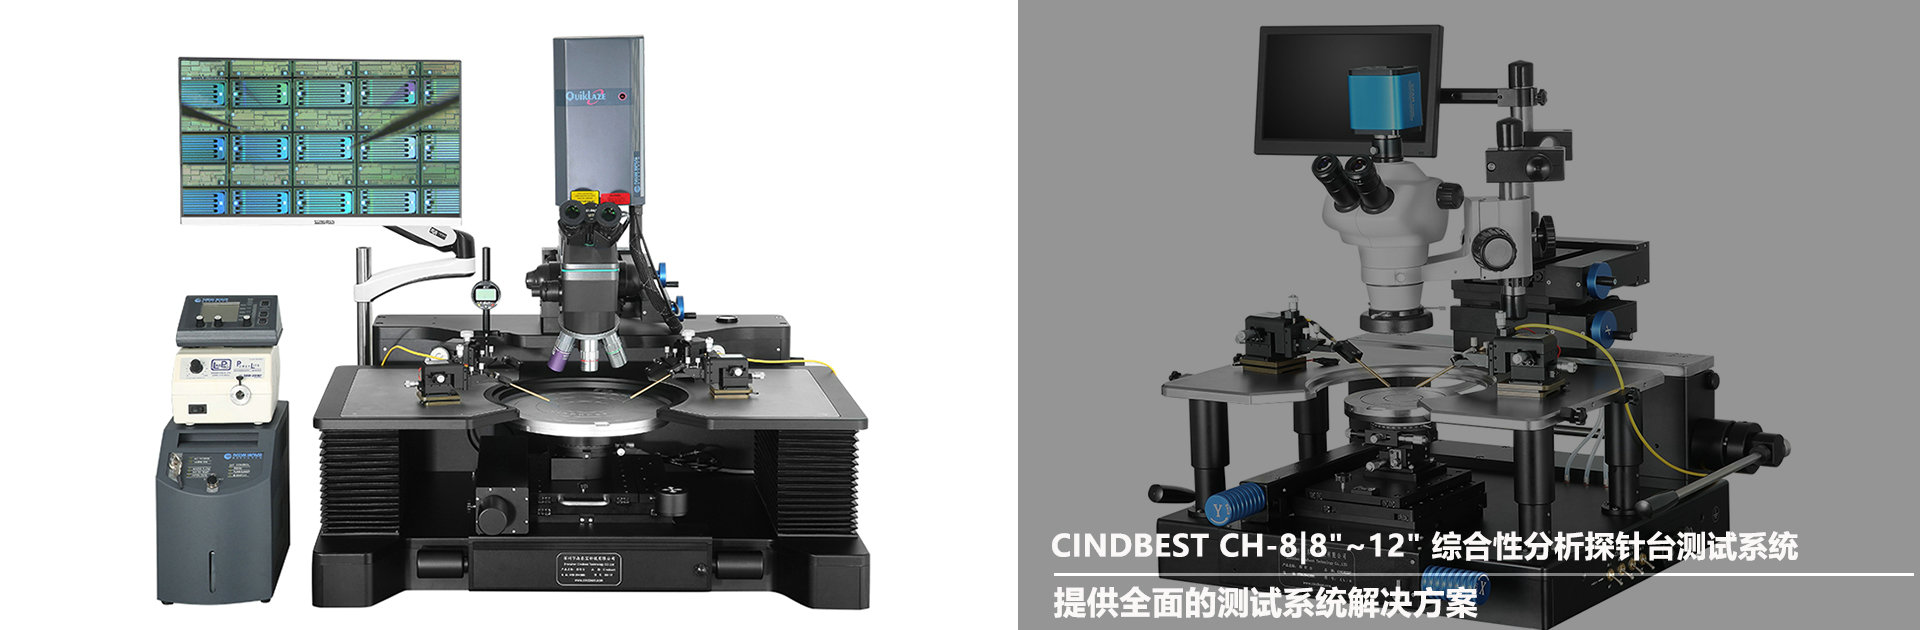 Shenzhen Cindbest Technology Co., Ltd.